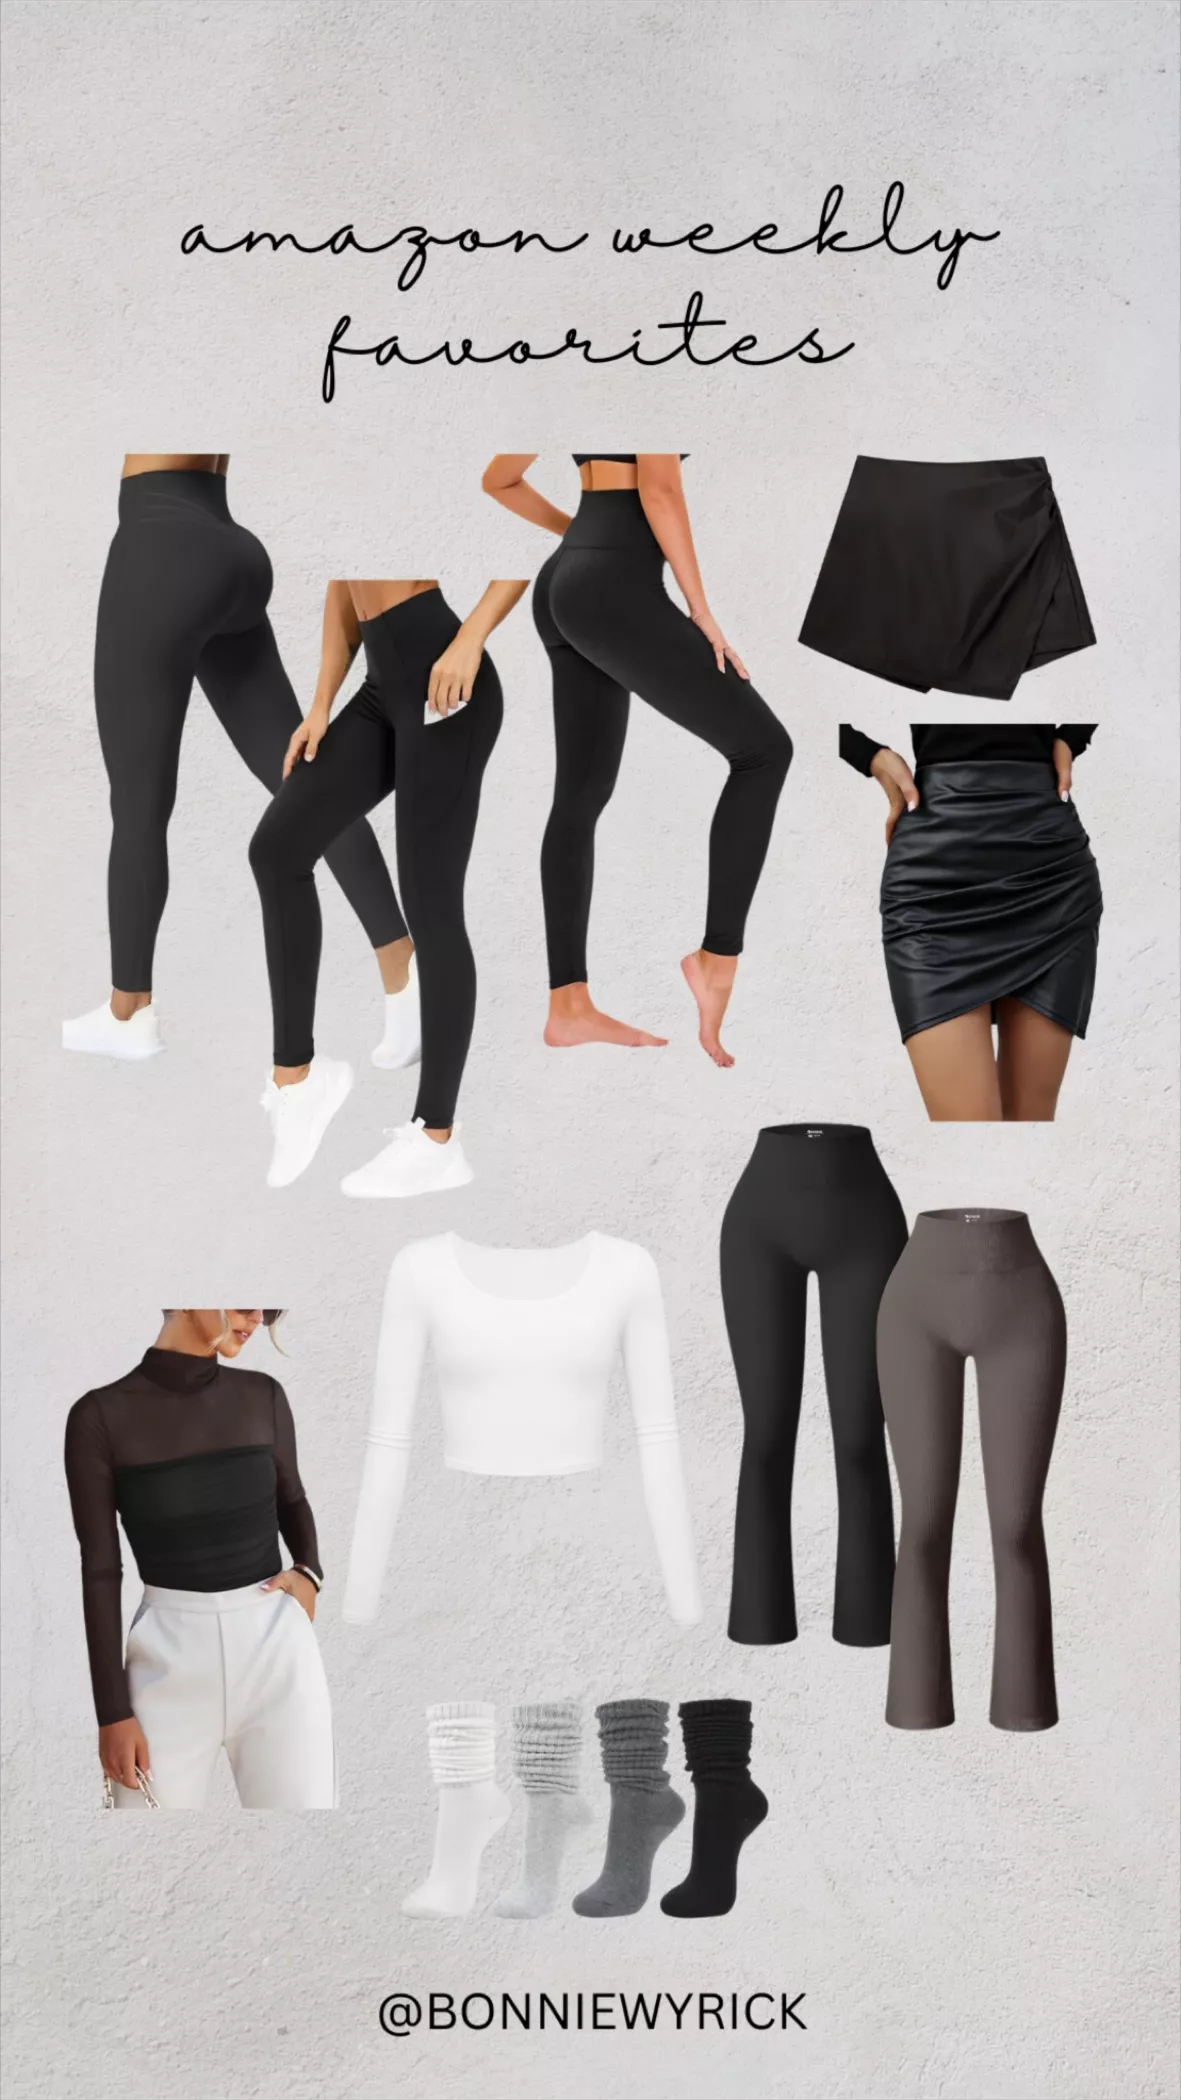 TNNZEET Leggings for Women, Black High Waisted Plus Size Maternity Workout  Yoga Pants